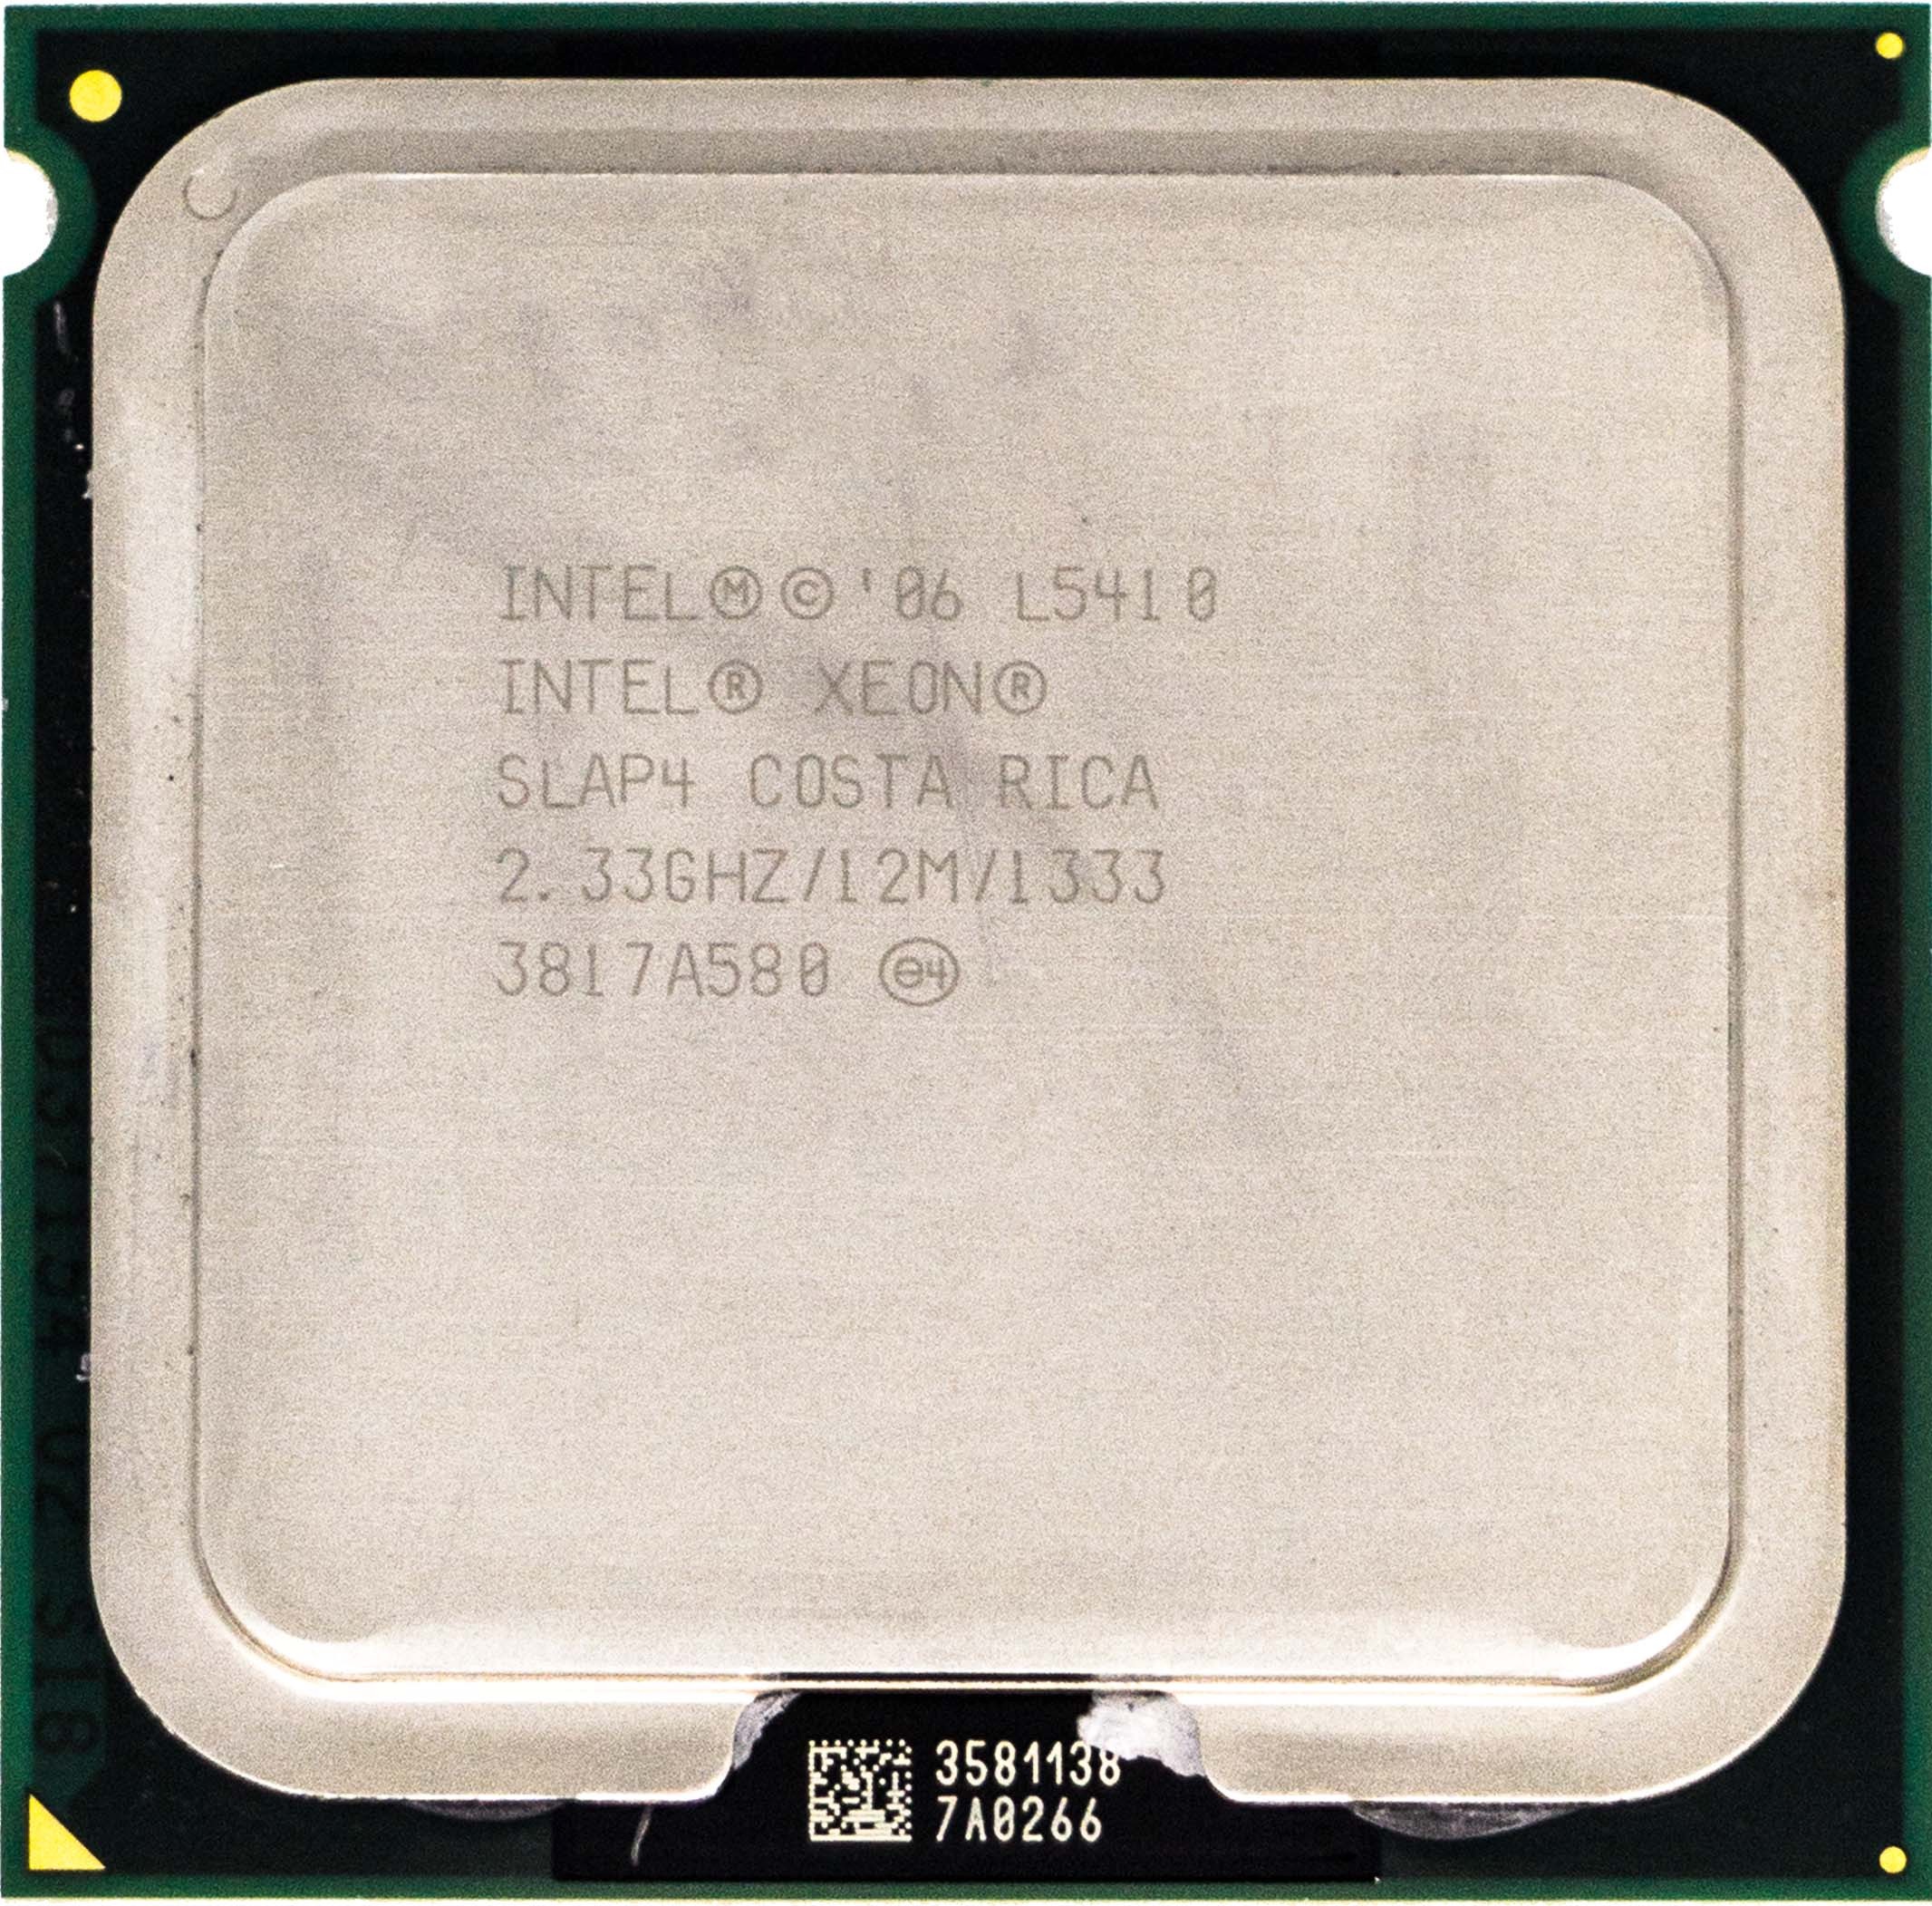 Intel Xeon L5410 (SLAP4) 2.33Ghz Quad (4) Core LGA771 50W CPU